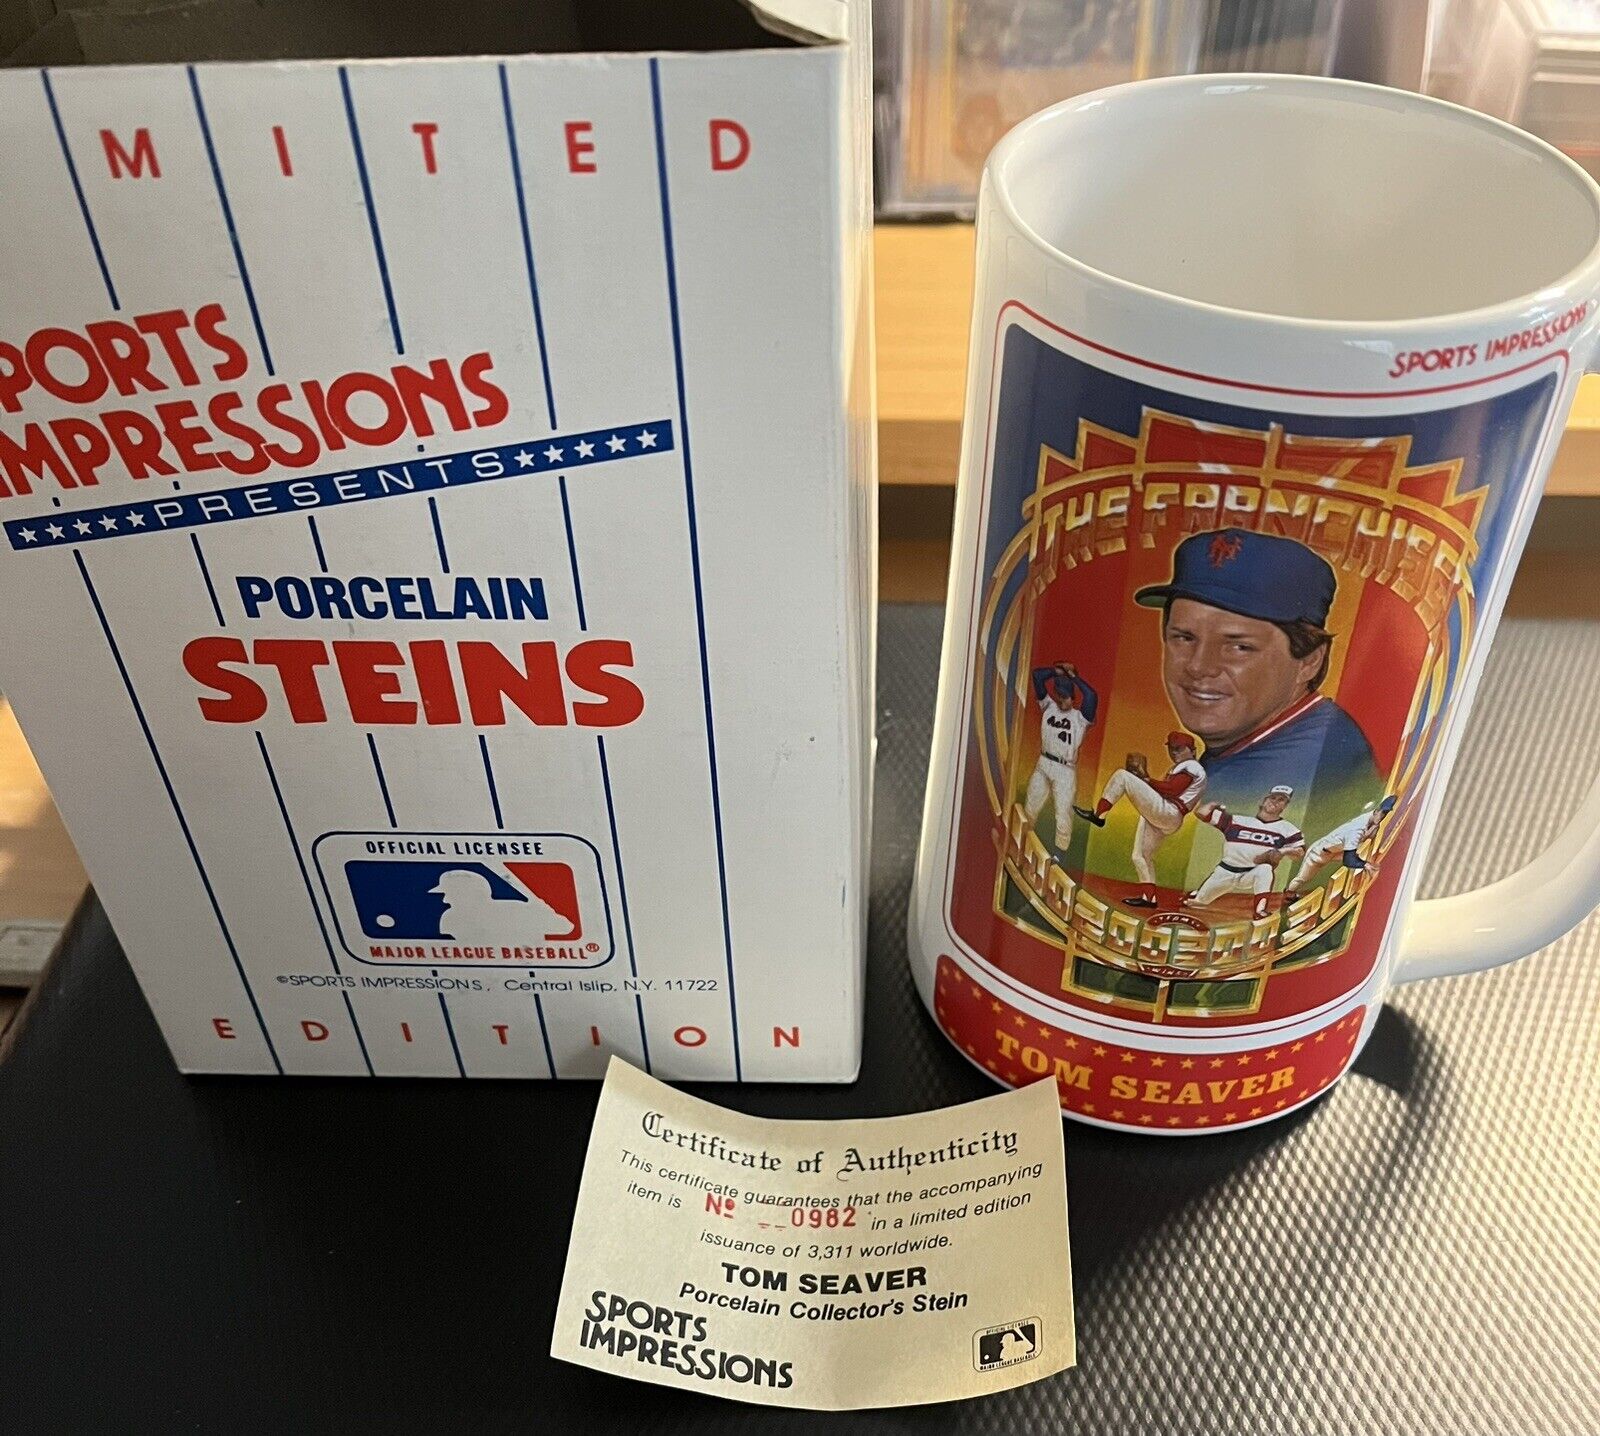 Tom Seaver Sports Impressions Porcelain Stein w/ Original Box Packaging